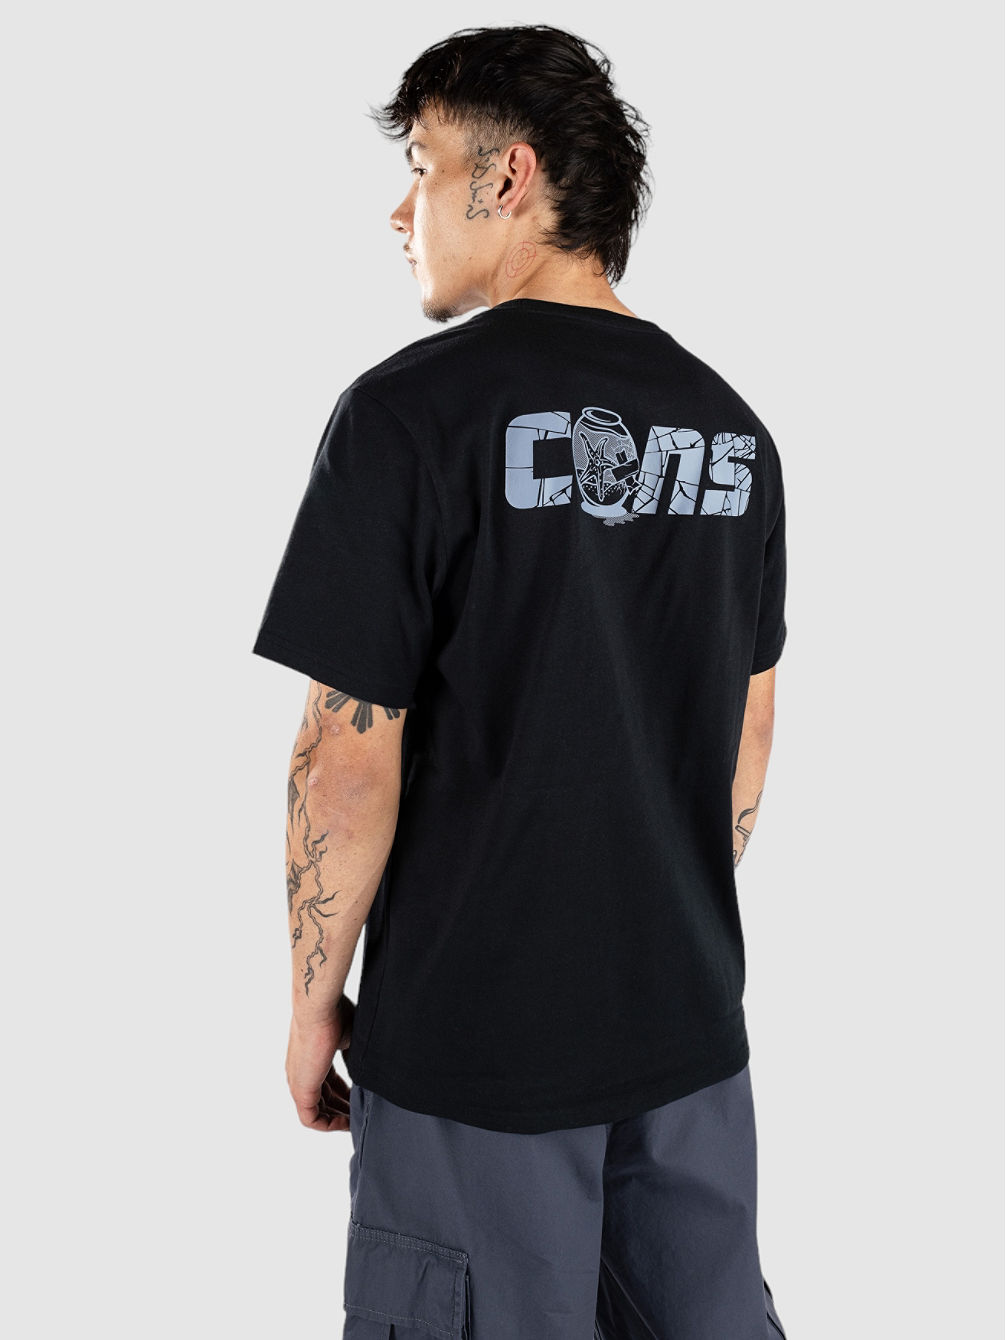 Cons Fishbowl Camiseta